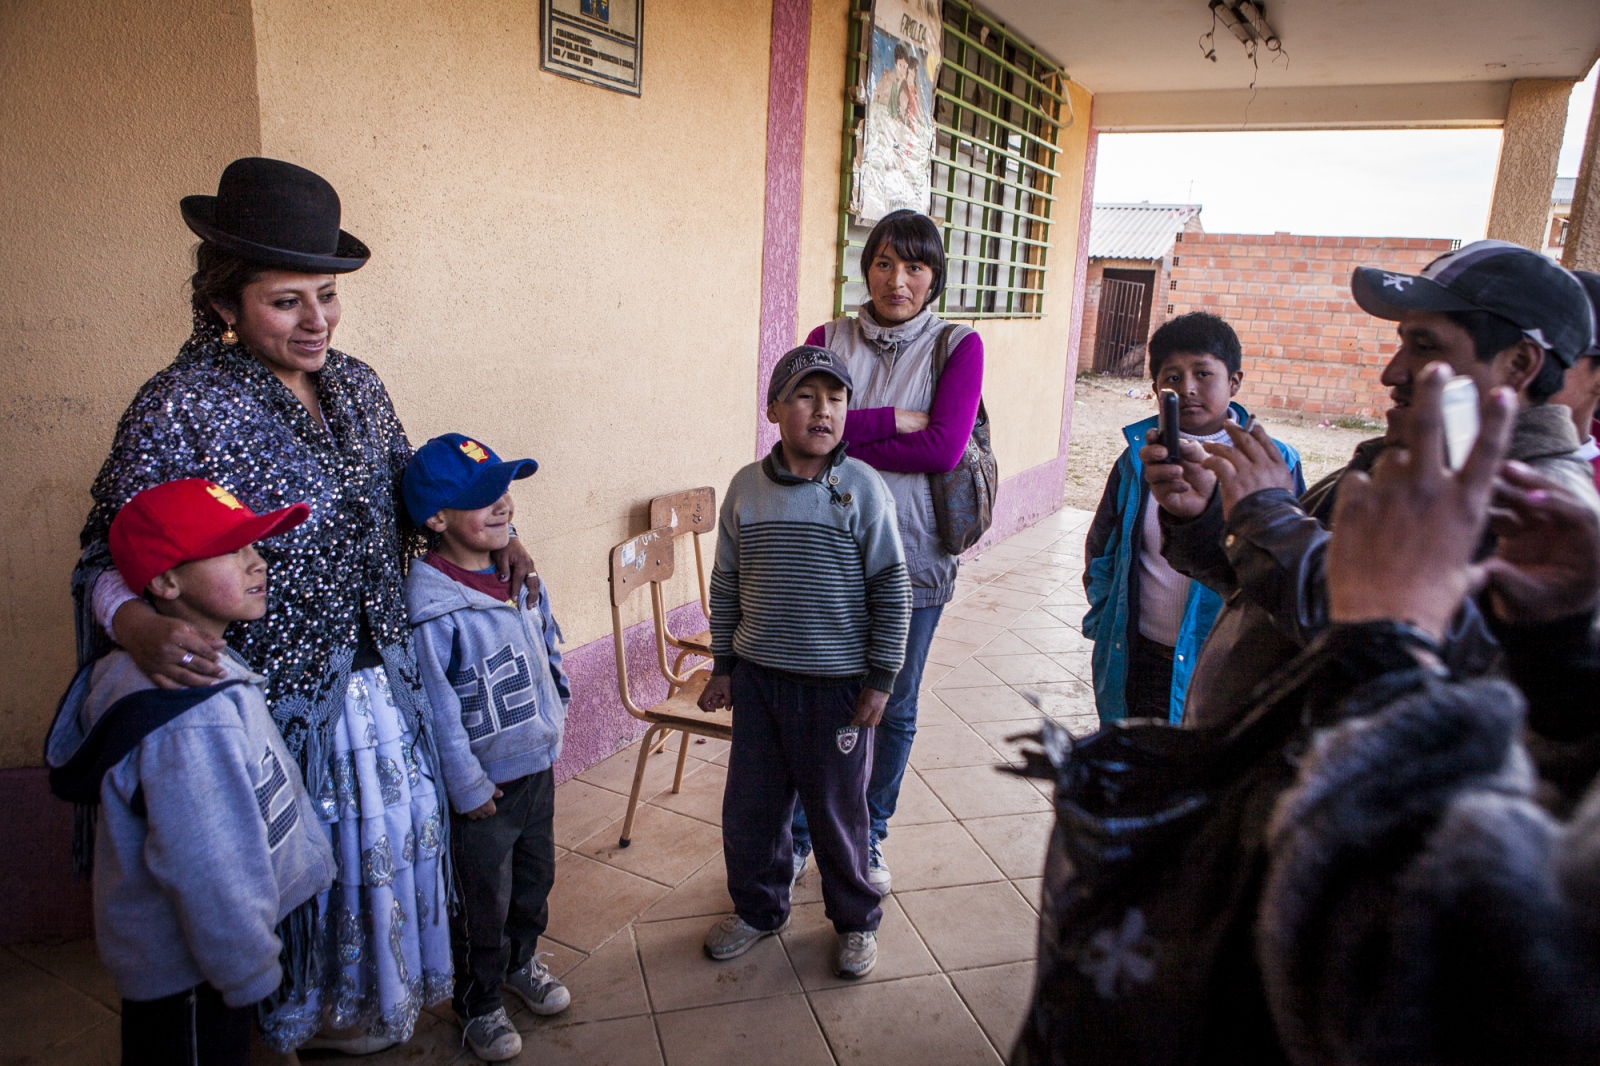  Juanita La Carinosa takes photos with young fans after the exhibition fight in Senkata, El Alto....